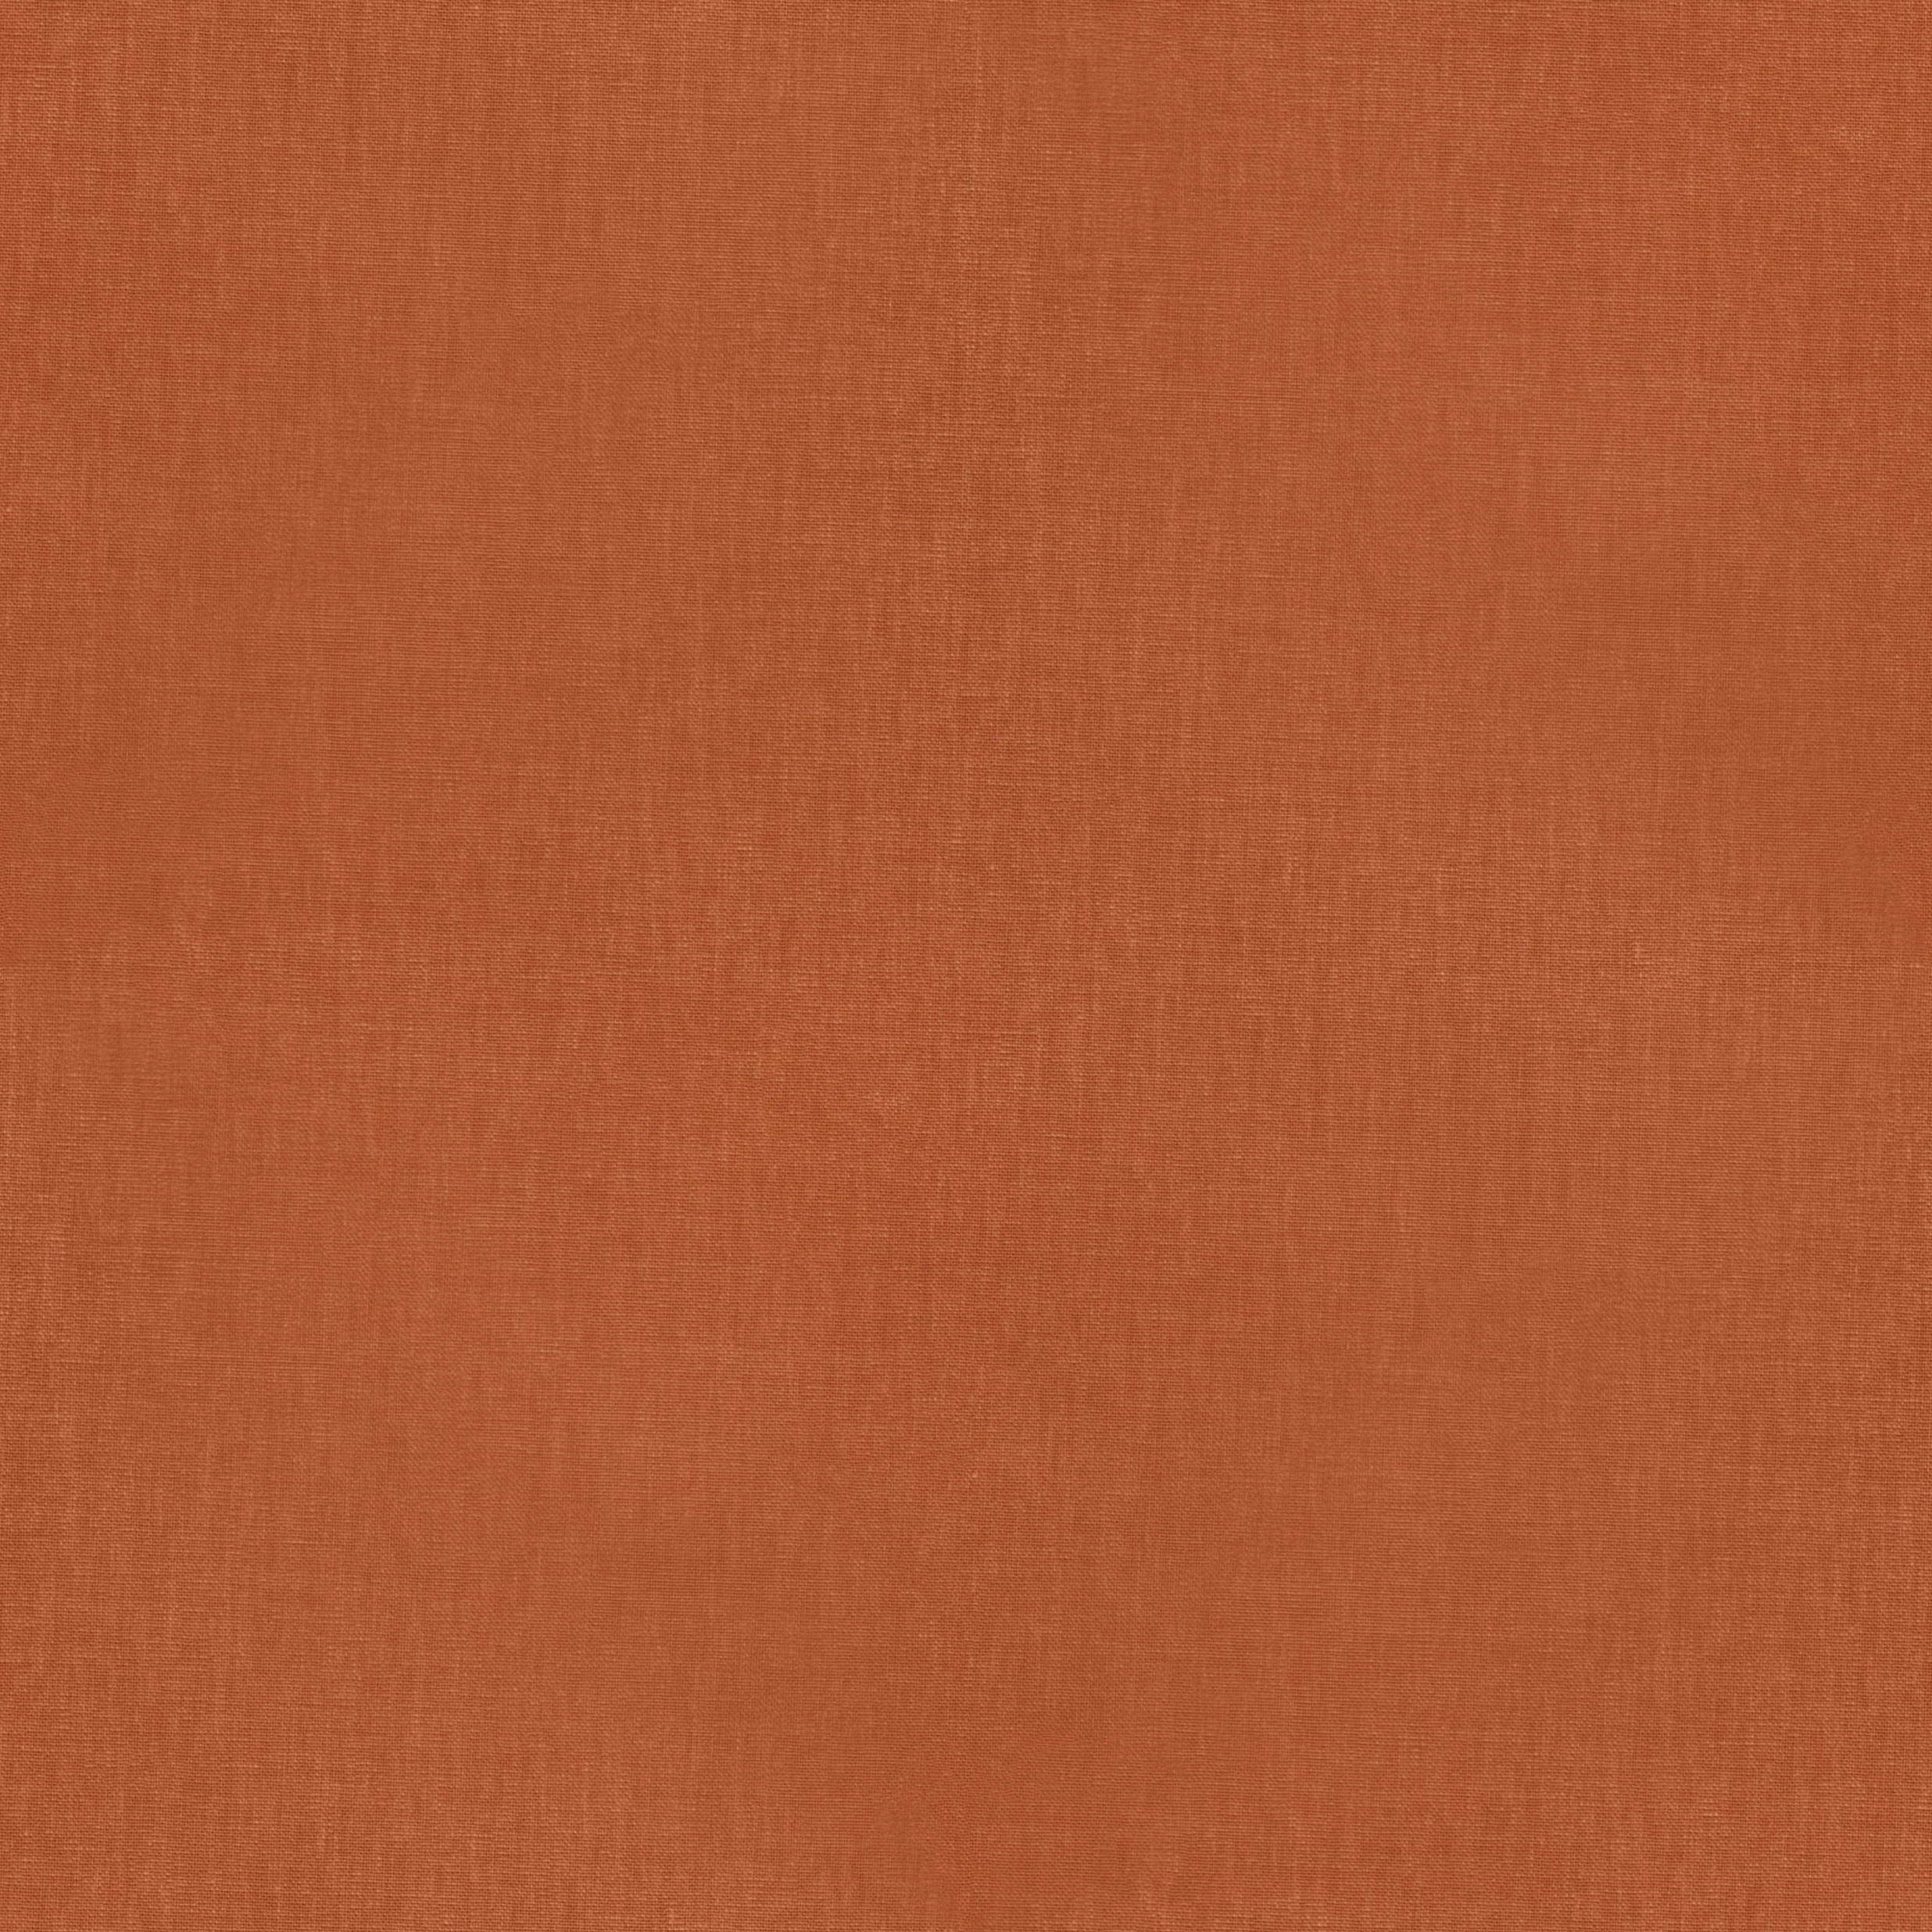 Burnt Orange coloured Classic Cotton fabric swatch